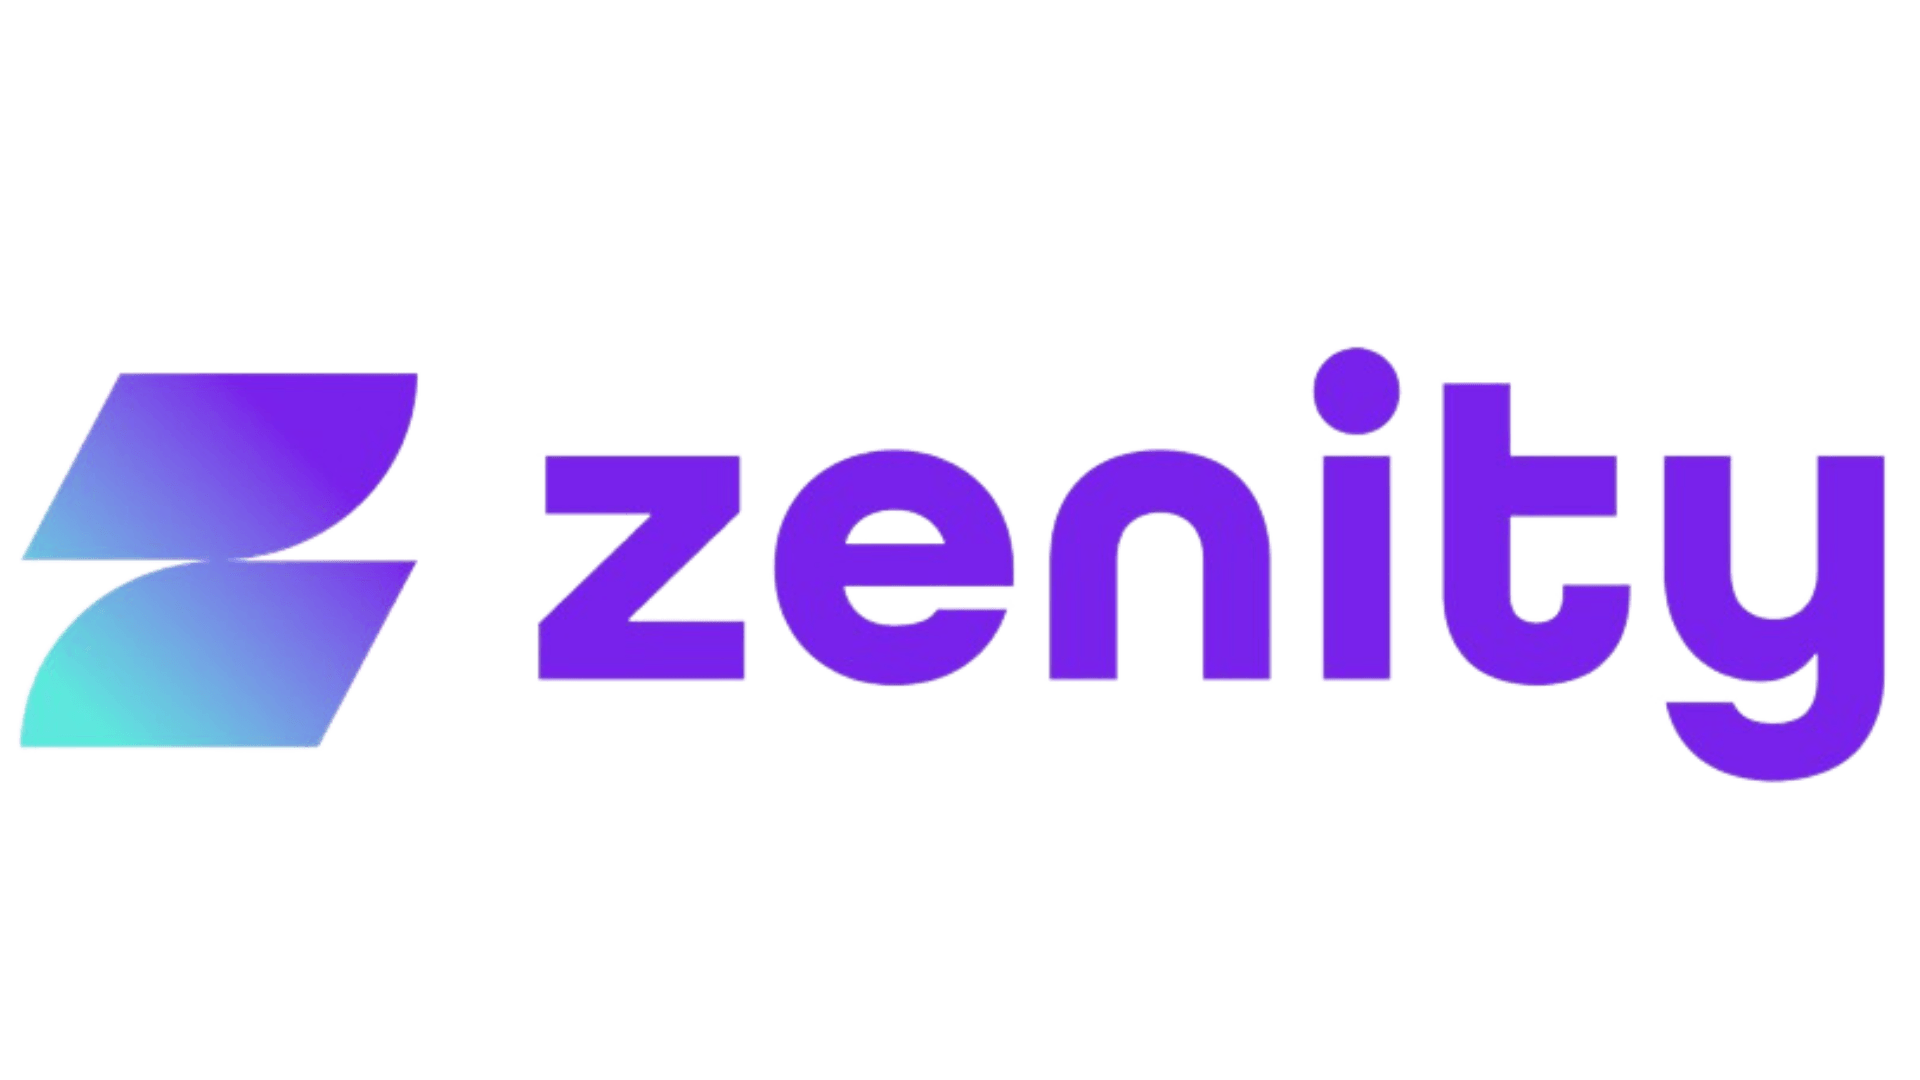 Zenity logo